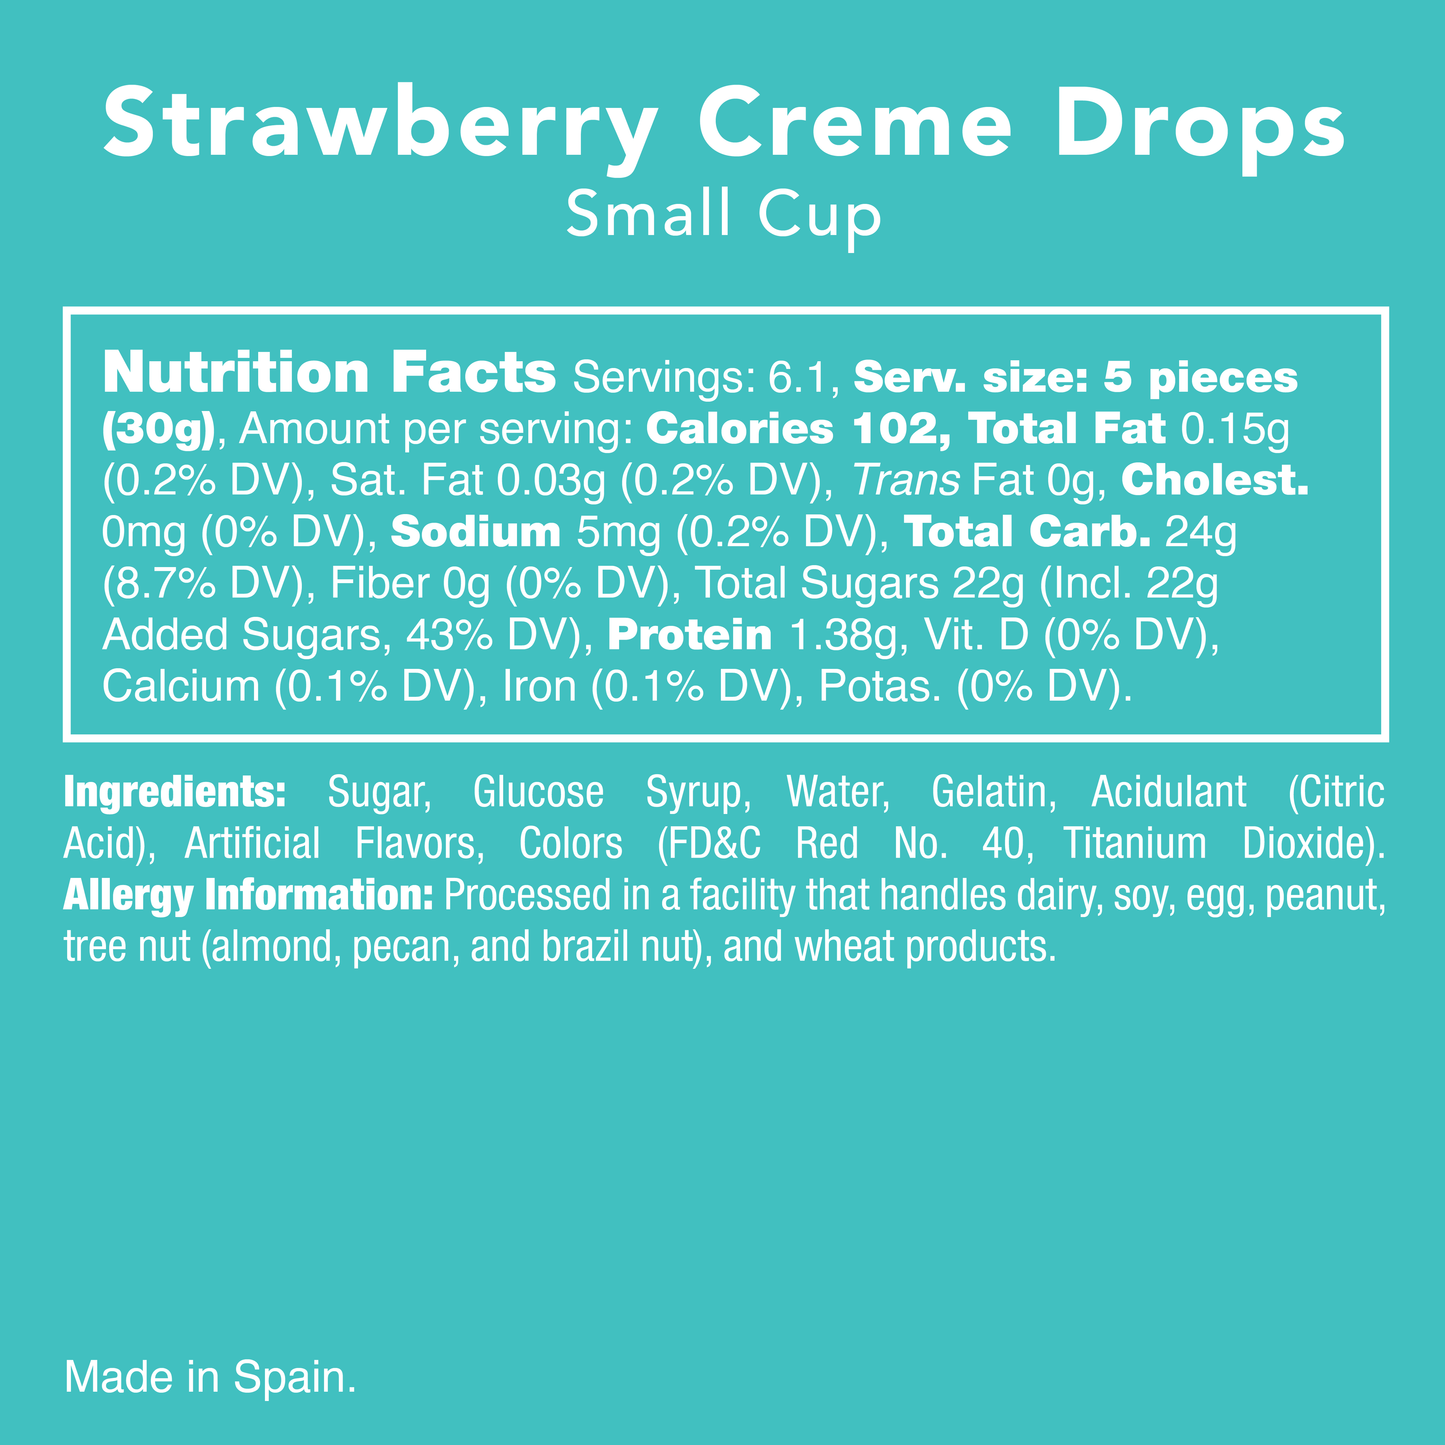 Strawberry Creme Drops